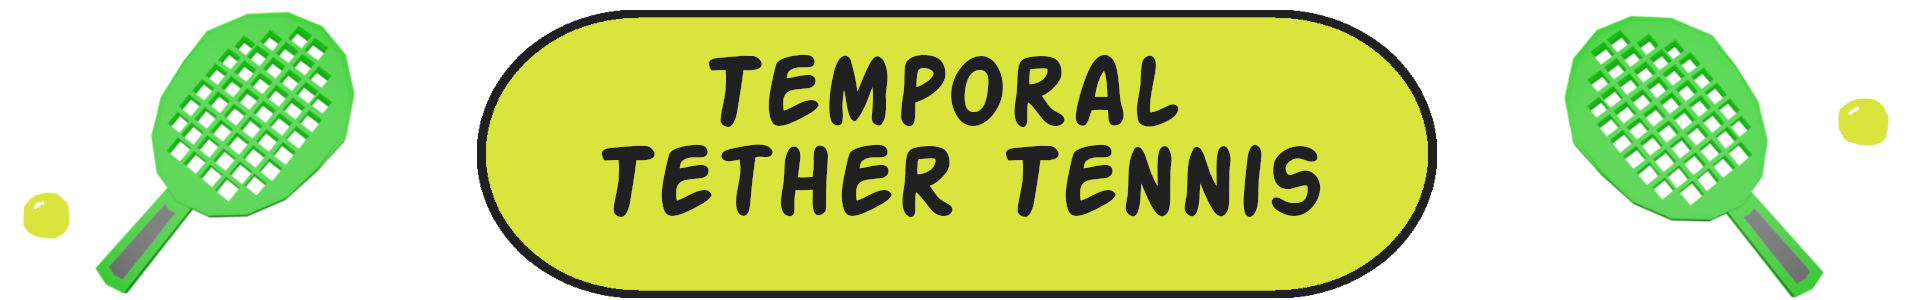 Temporal Tether Tennis